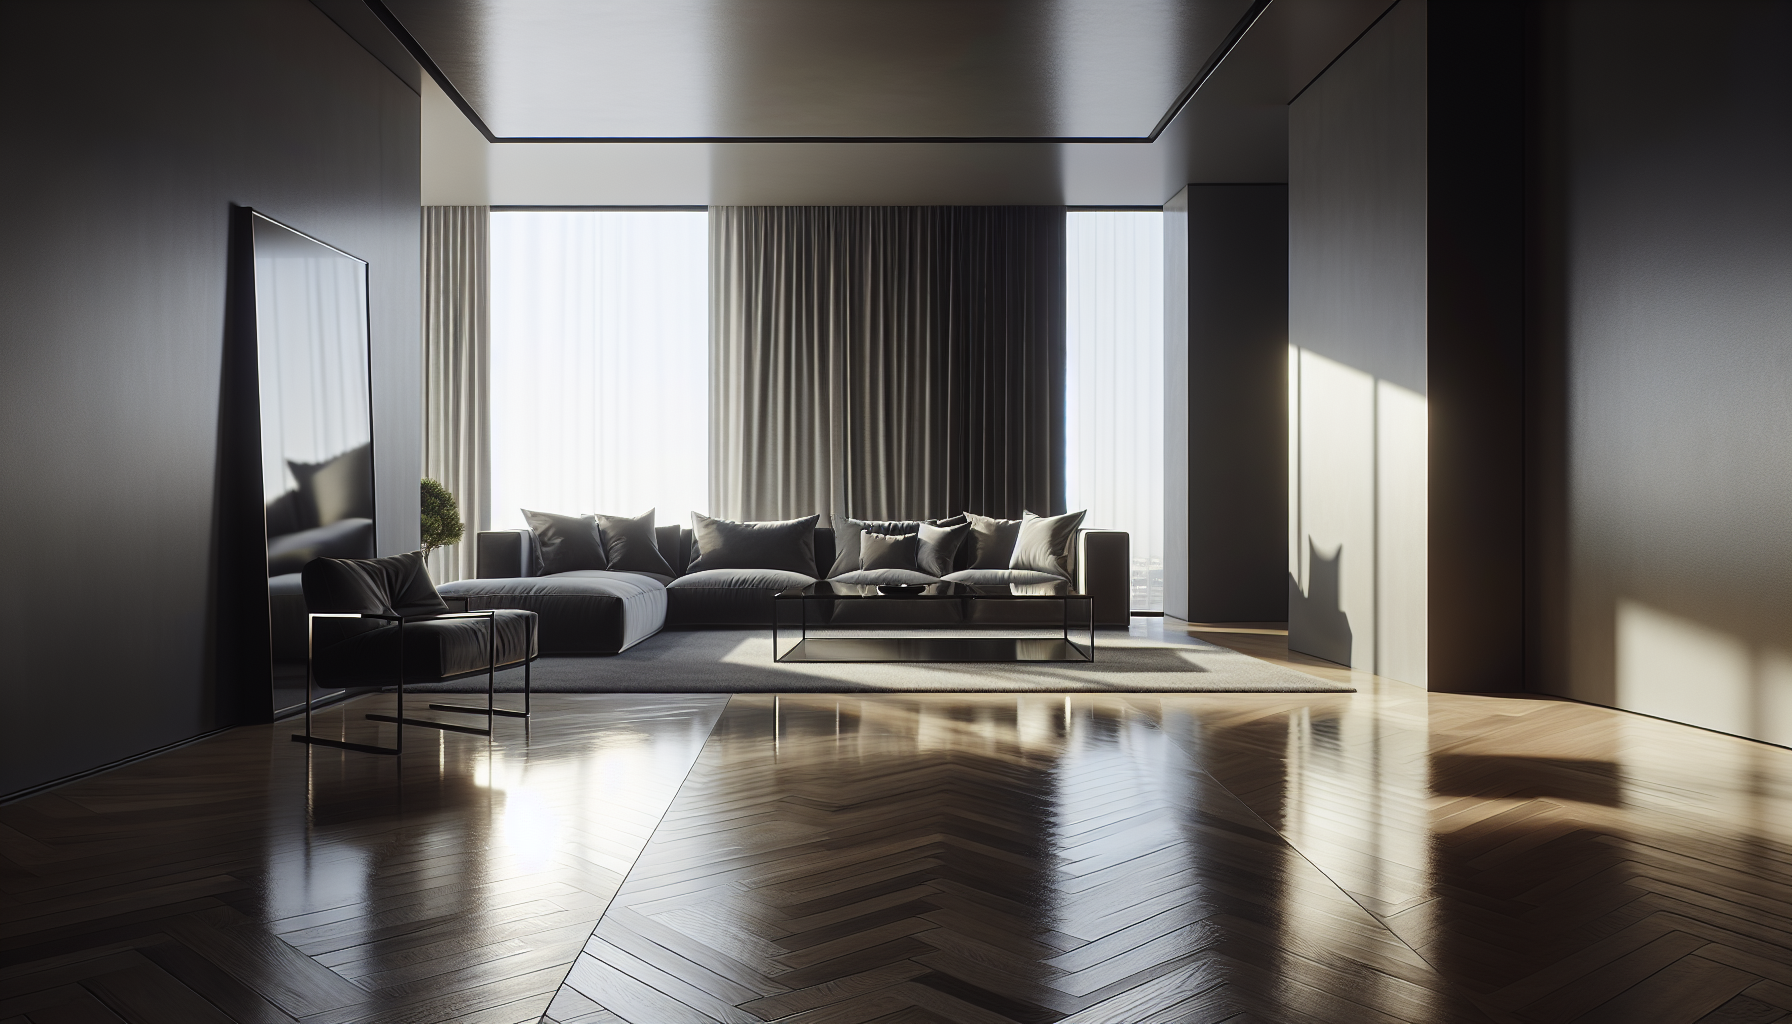 Natural elegance of hardwood floors elevating home ambiance